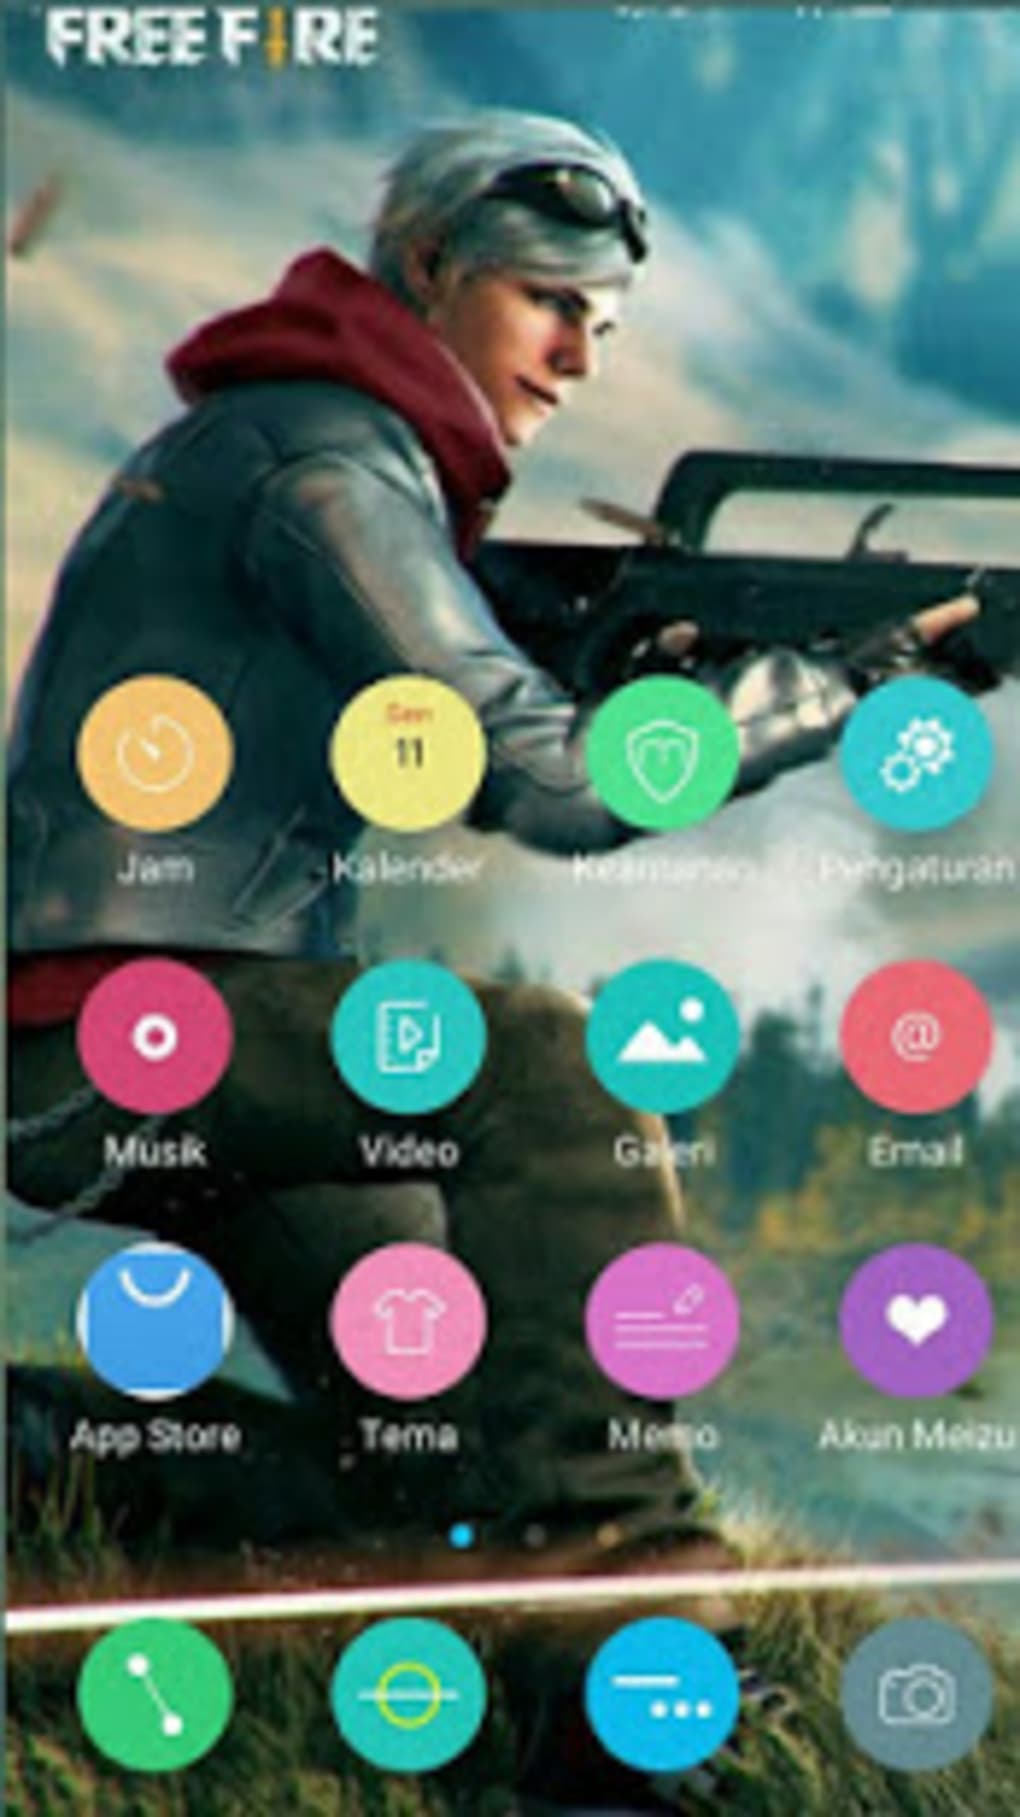 Wallpaper Free Fire Untuk Android Unduh